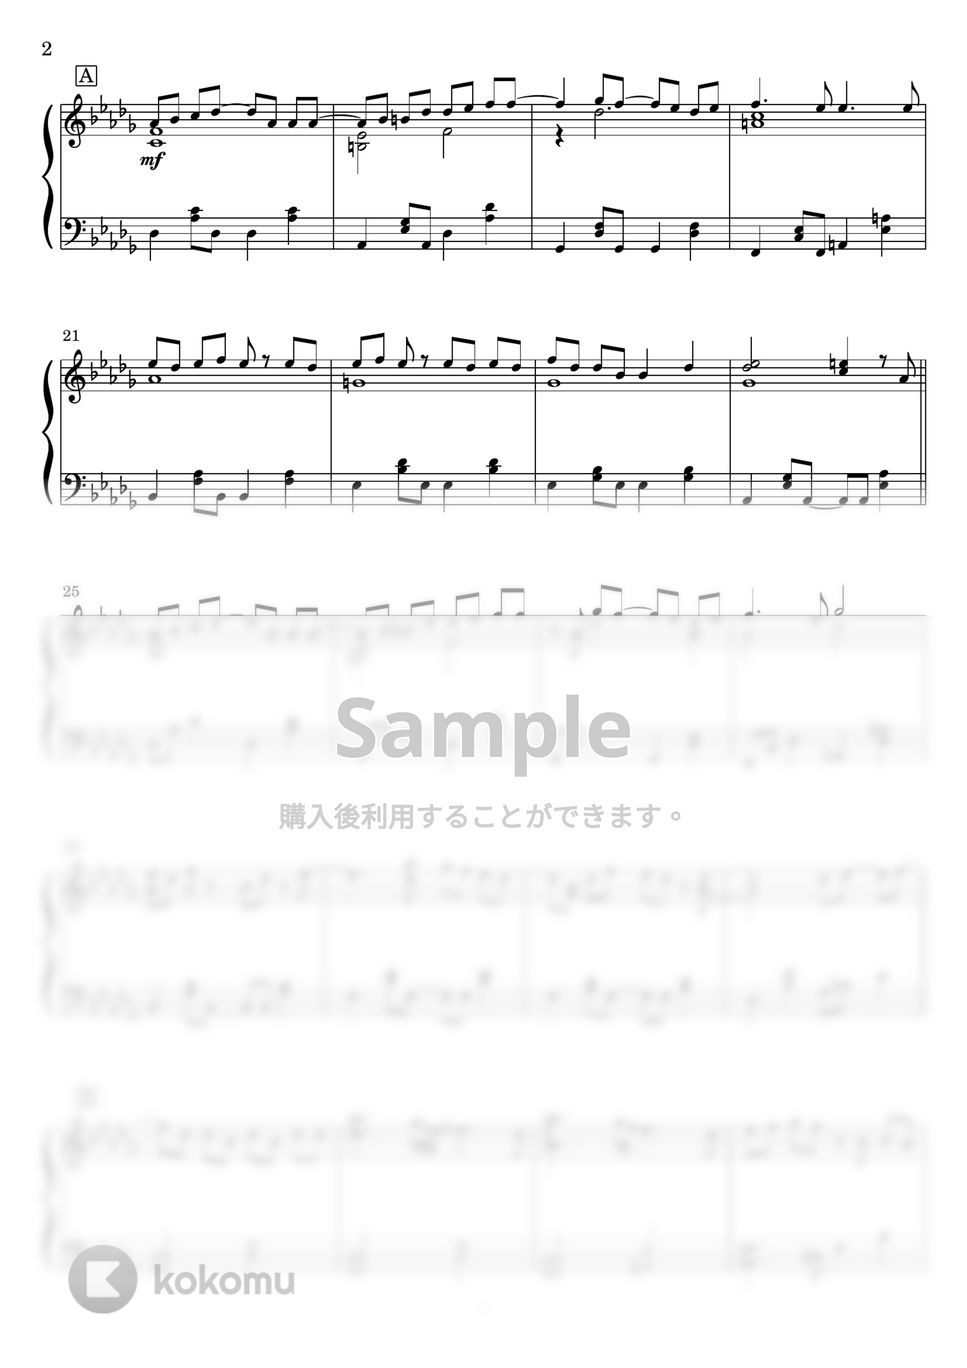 Official髭男dism - 日常 (フルver.) (ピアノソロ) by Miz